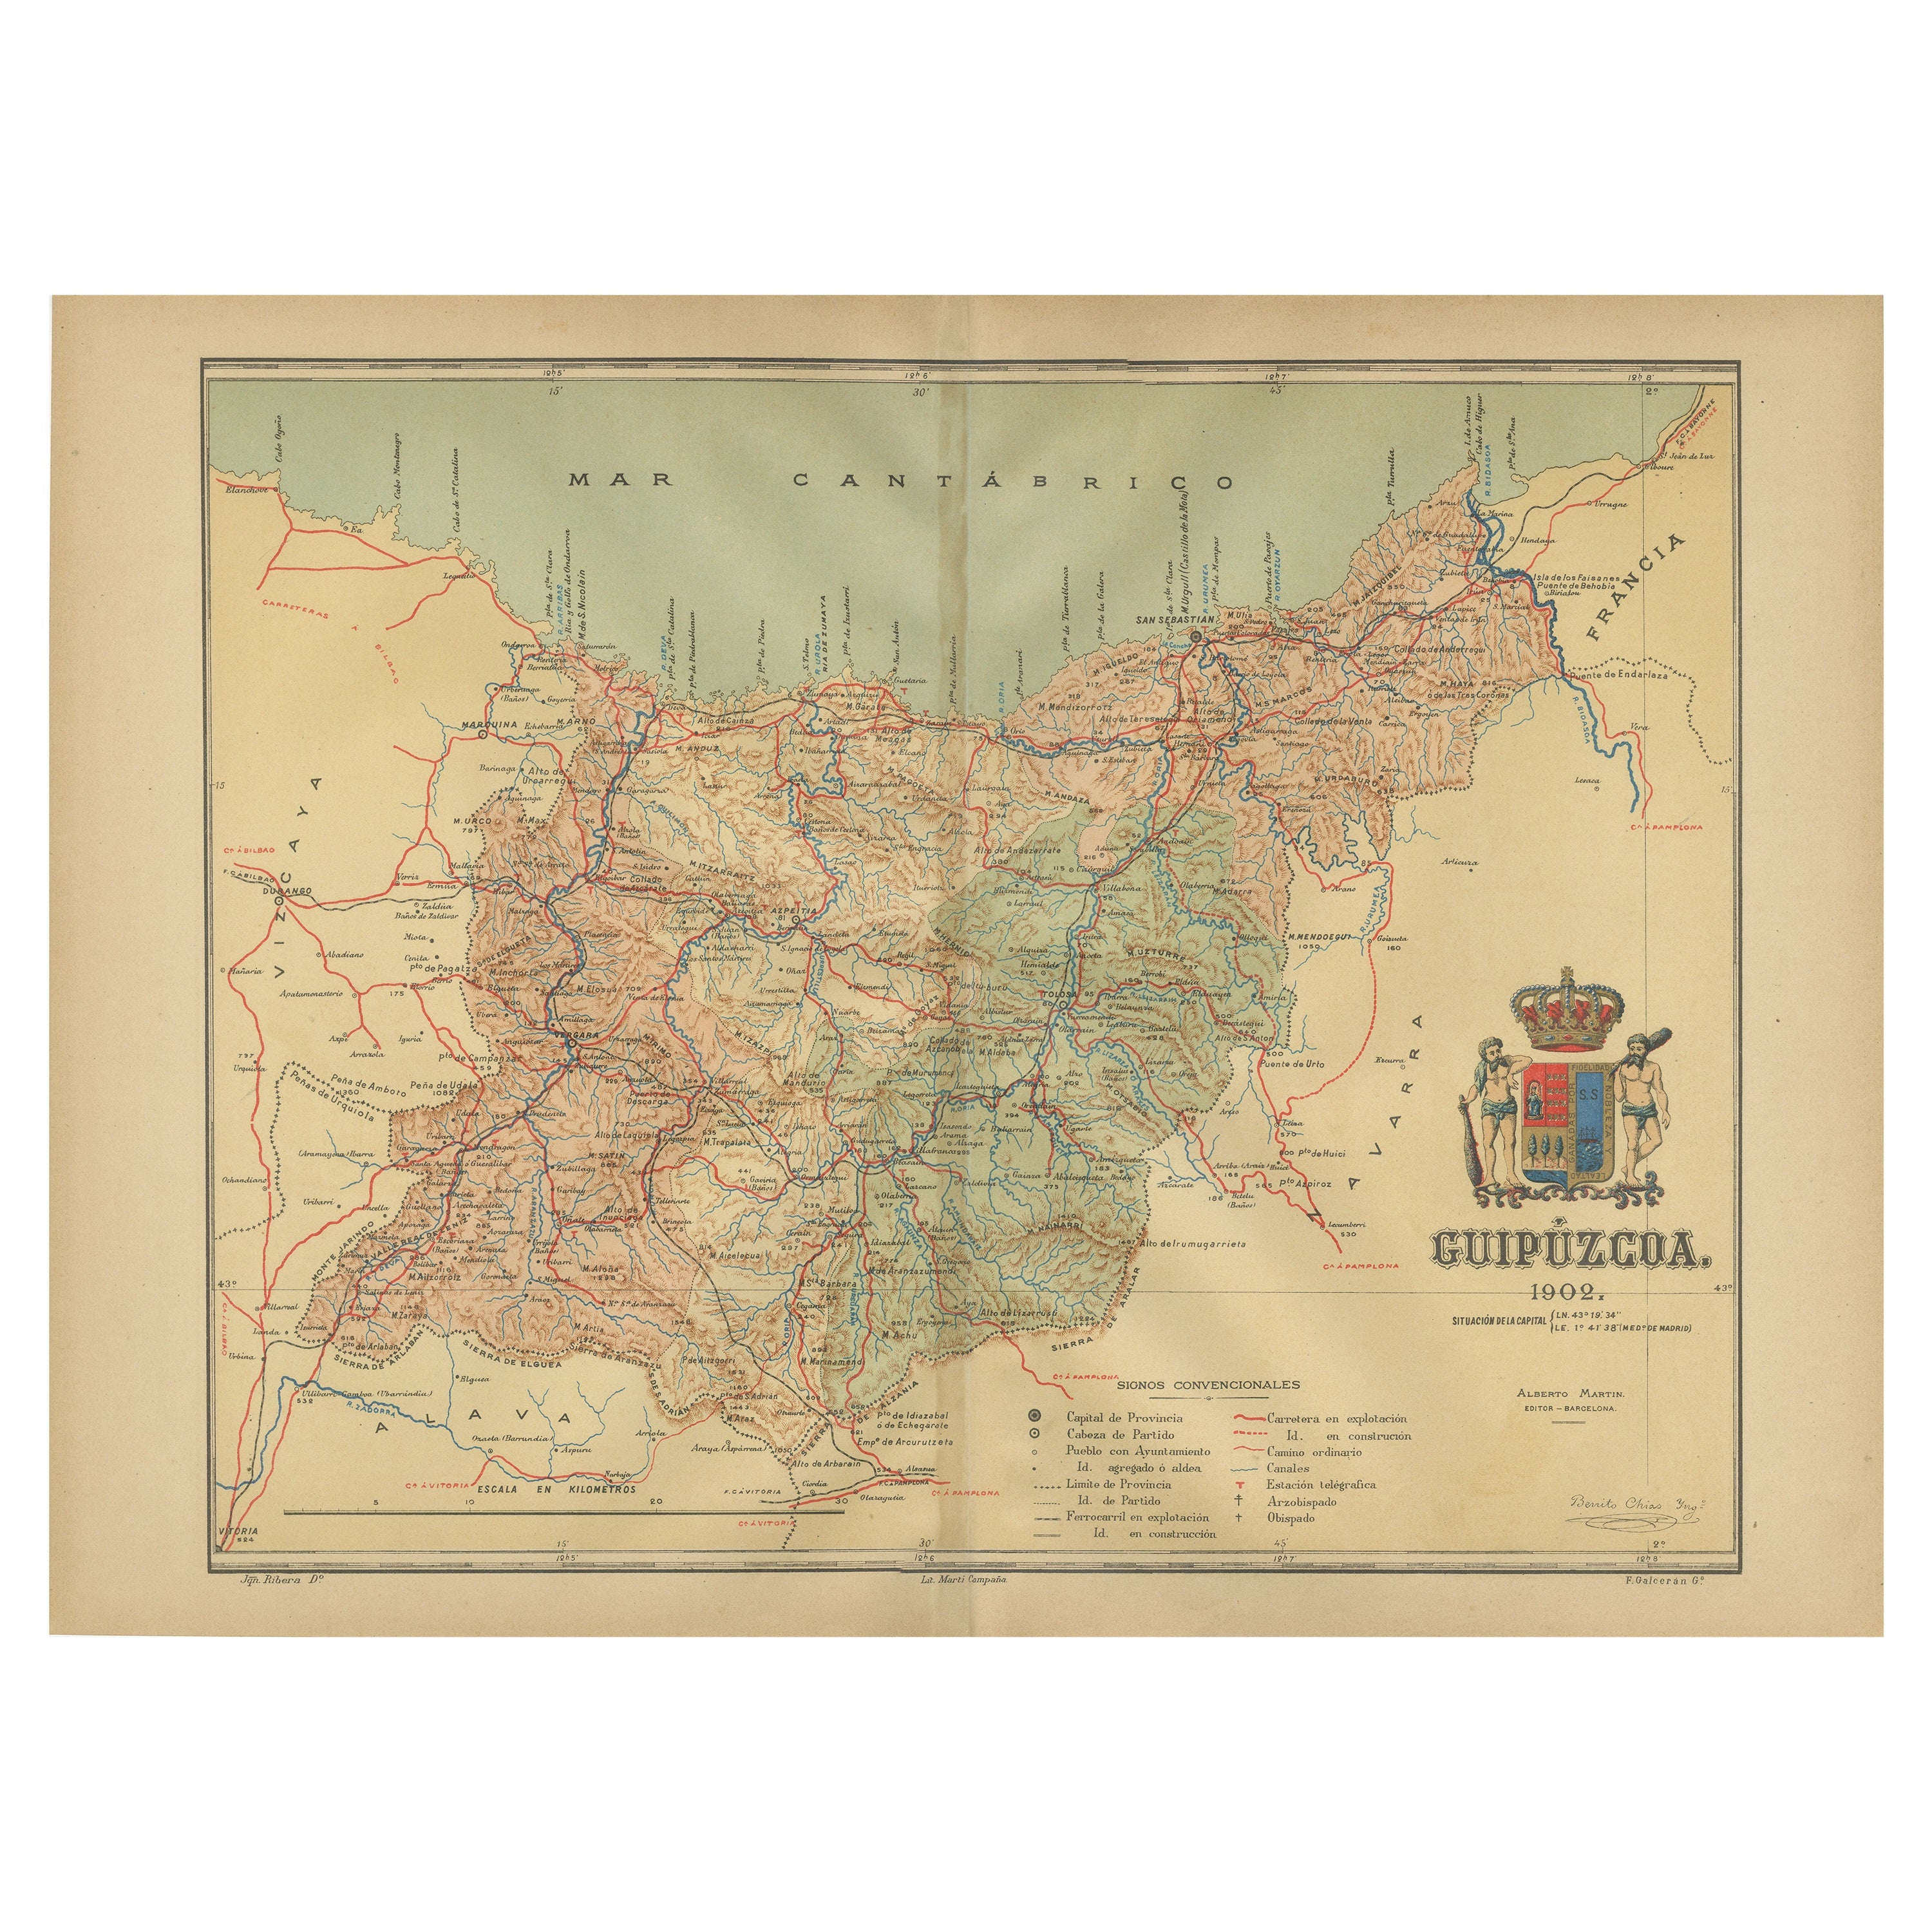 Gipuzkoa 1902: A Cartographic Snapshot of the Basque Coastline and Highlands